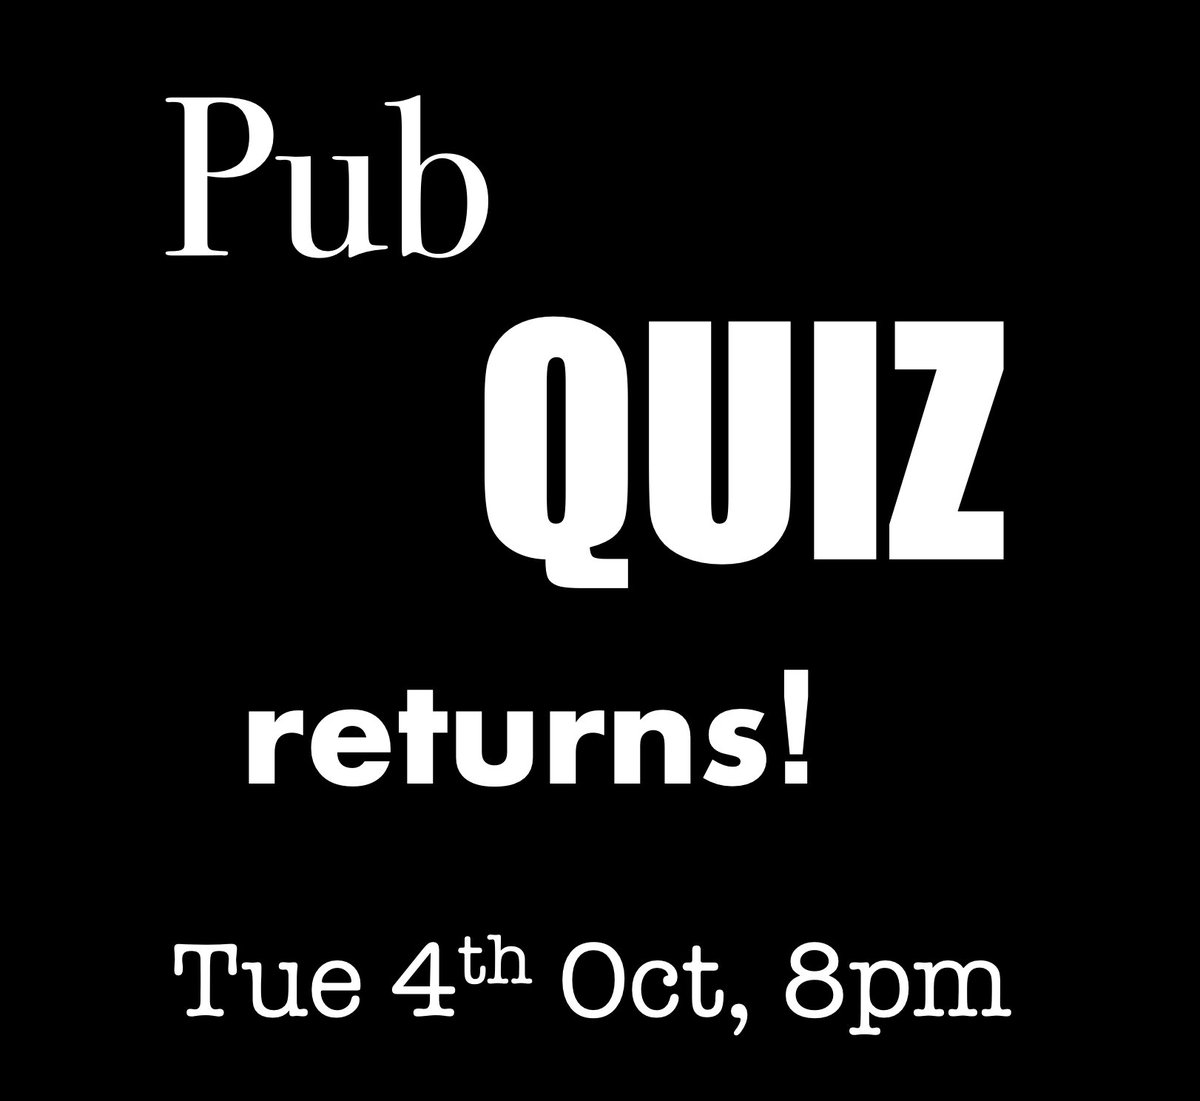 Pub Quiz returns, Tue 4th Oct, 8pm! Max 5 people per team, £1 per person, get here by 7:30pm if you want a seat! #Cambridge #cambridgeuniversity #pubquiz #triviatuesday #trivia #games #fun